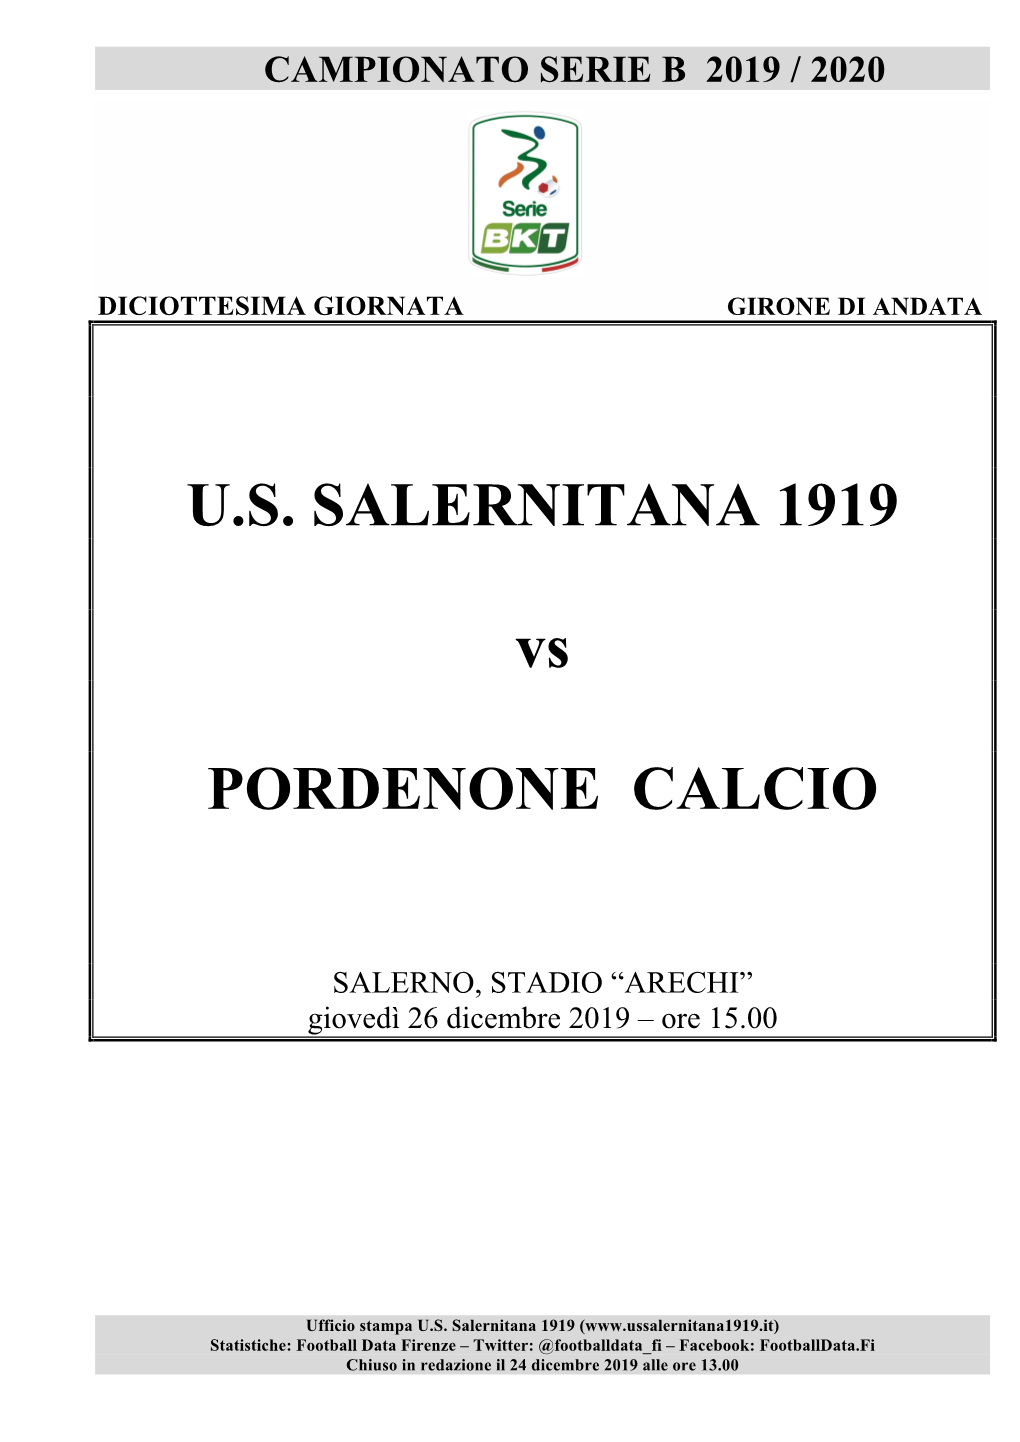 U.S. SALERNITANA 1919 Vs PORDENONE CALCIO